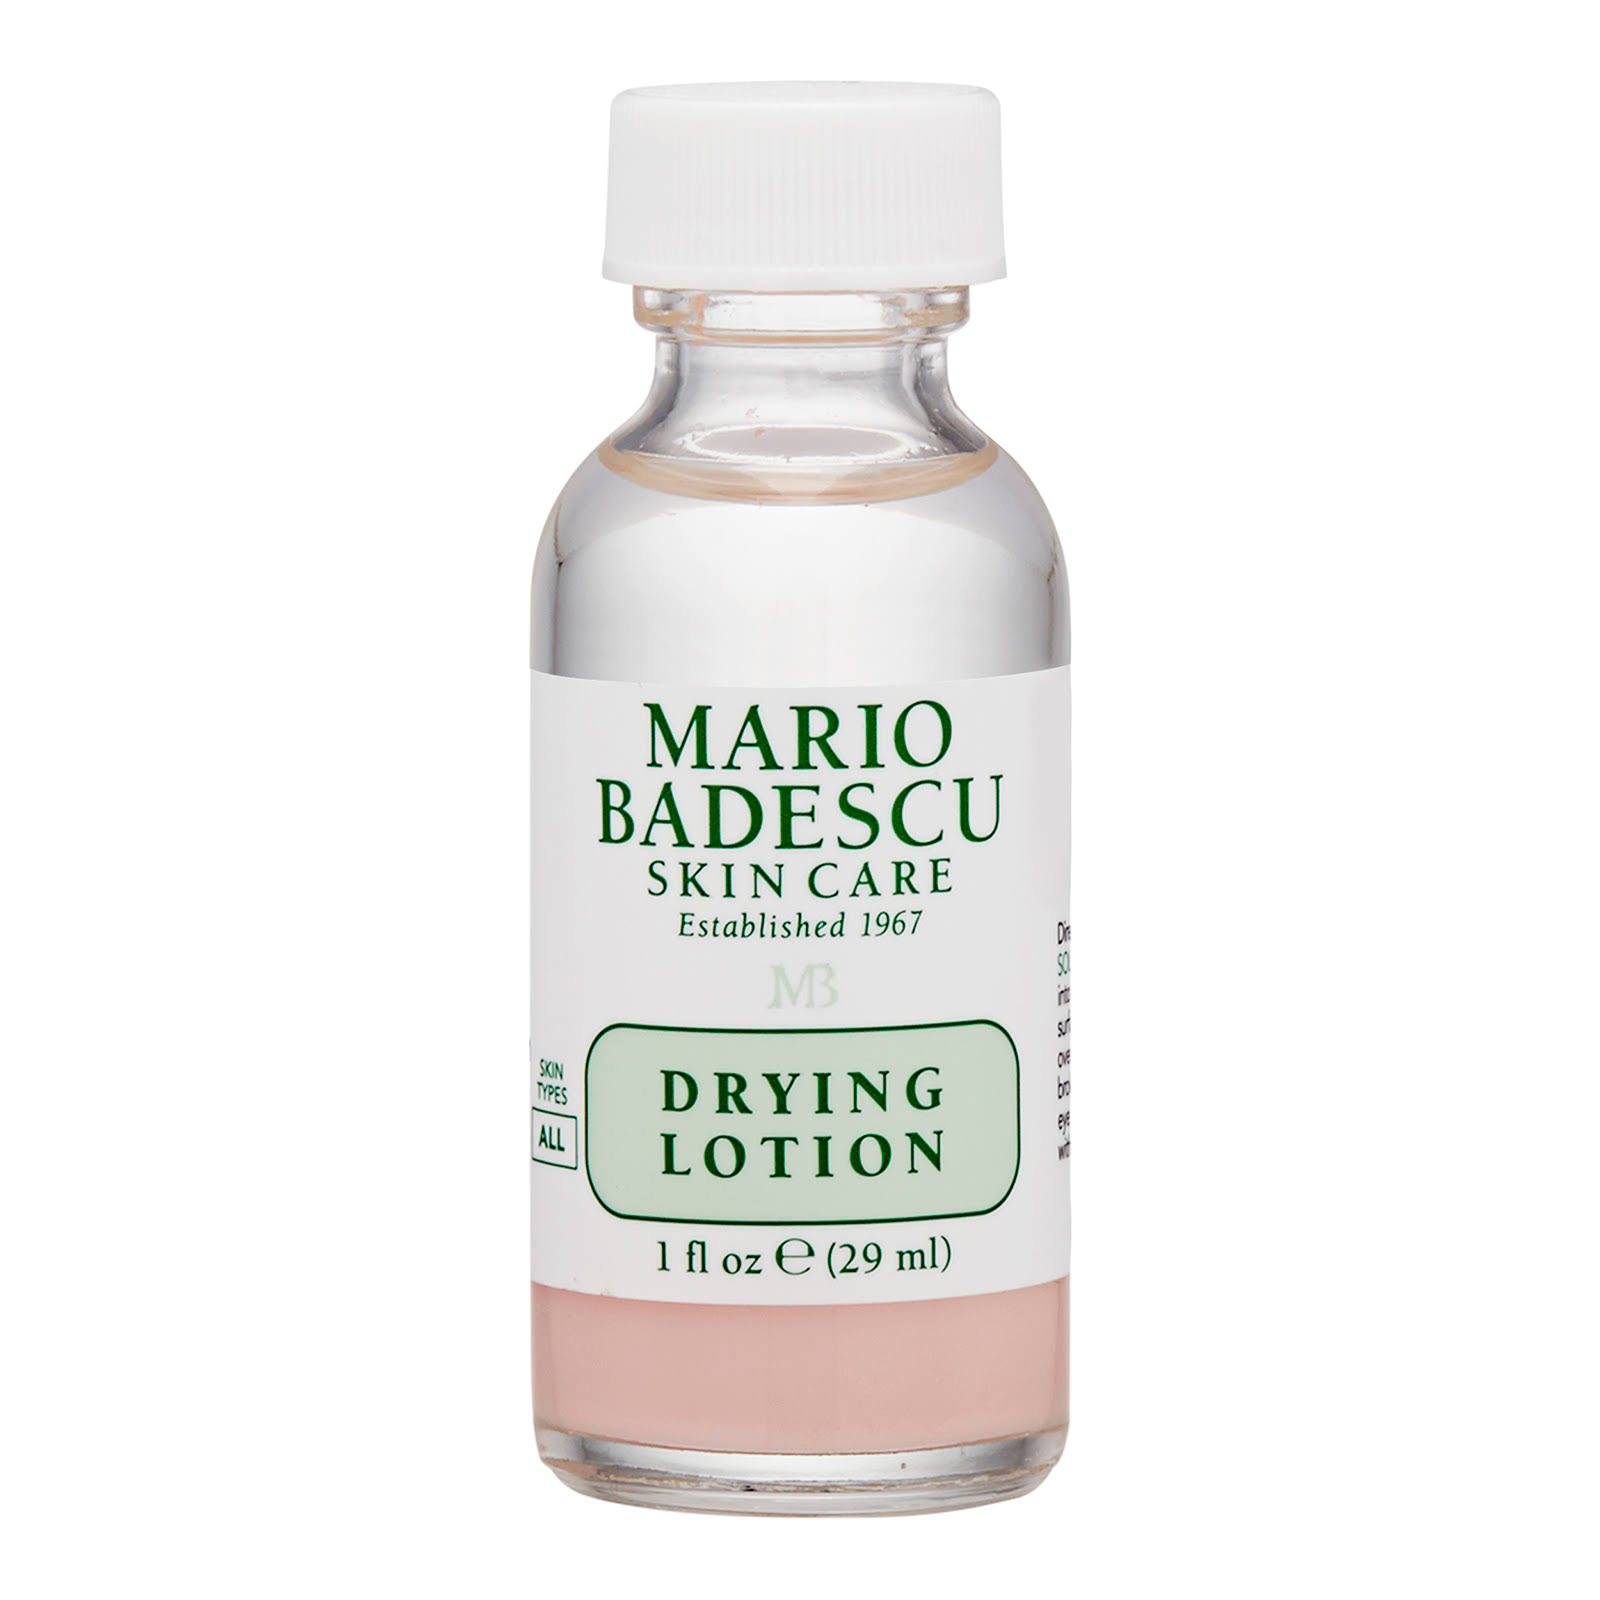 Mario Badescu Skin Care Drying Lotion - 1oz